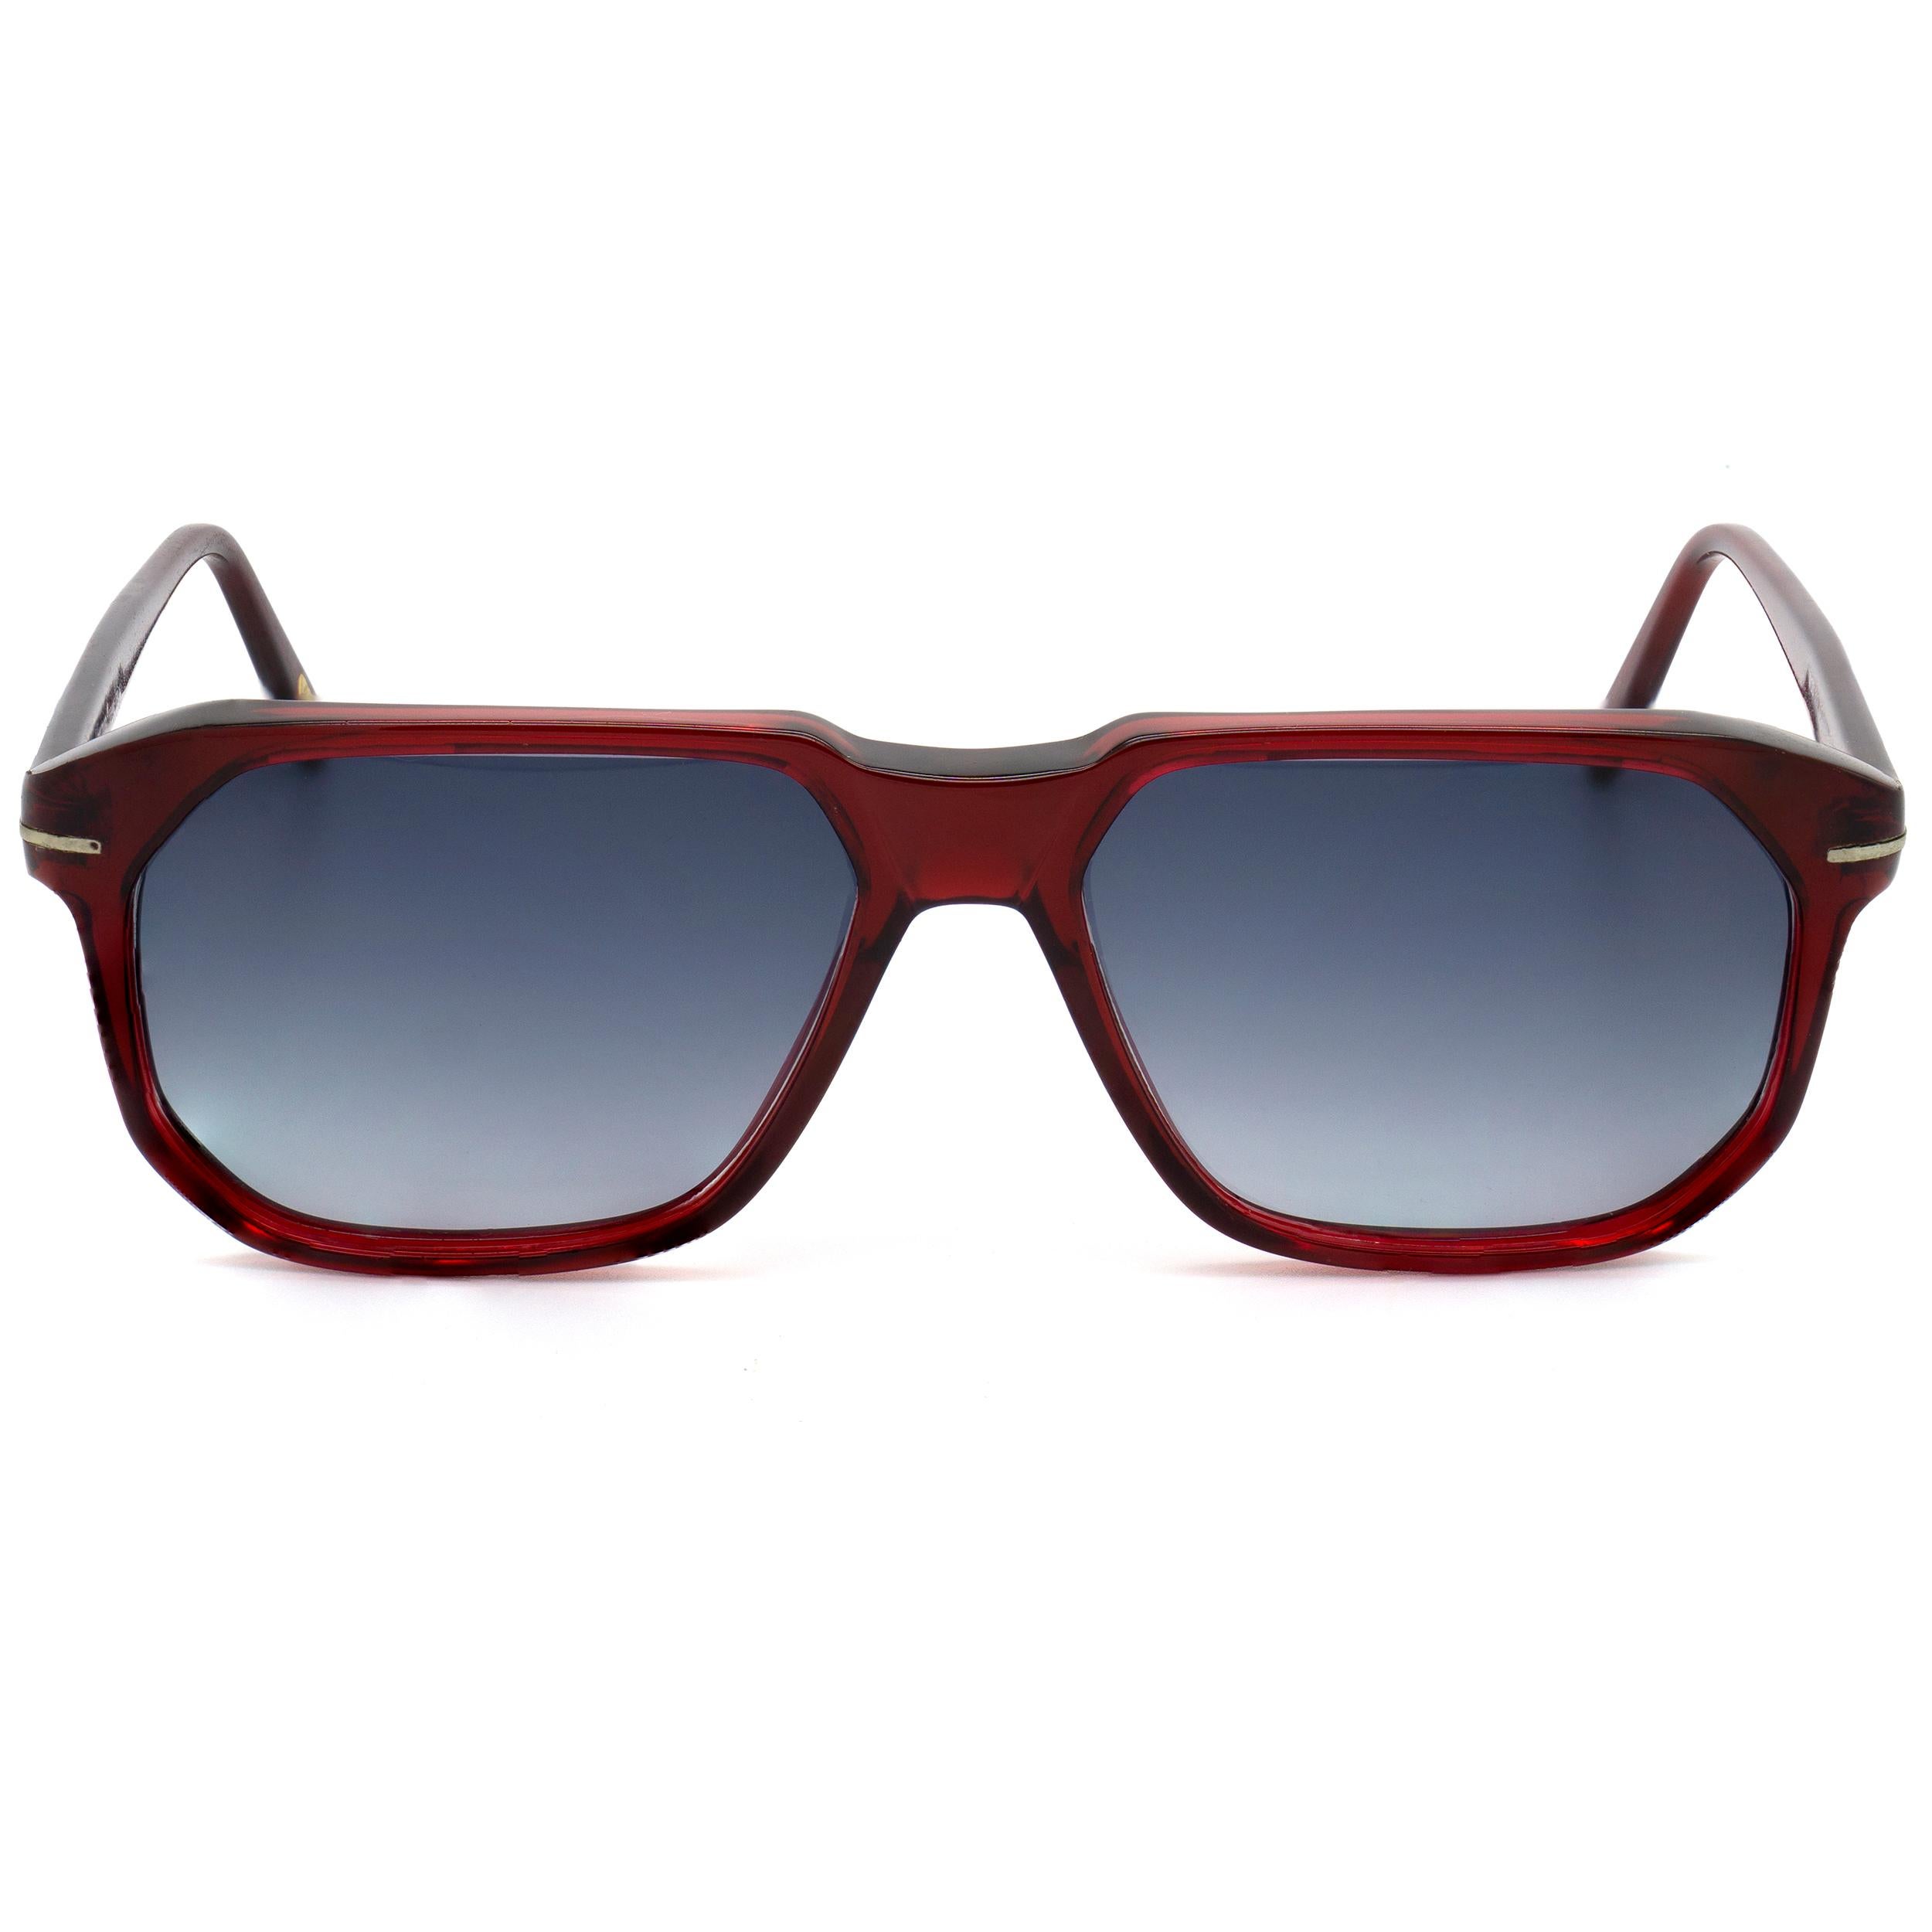 Gray Gianni Versace vintage sunglasses 